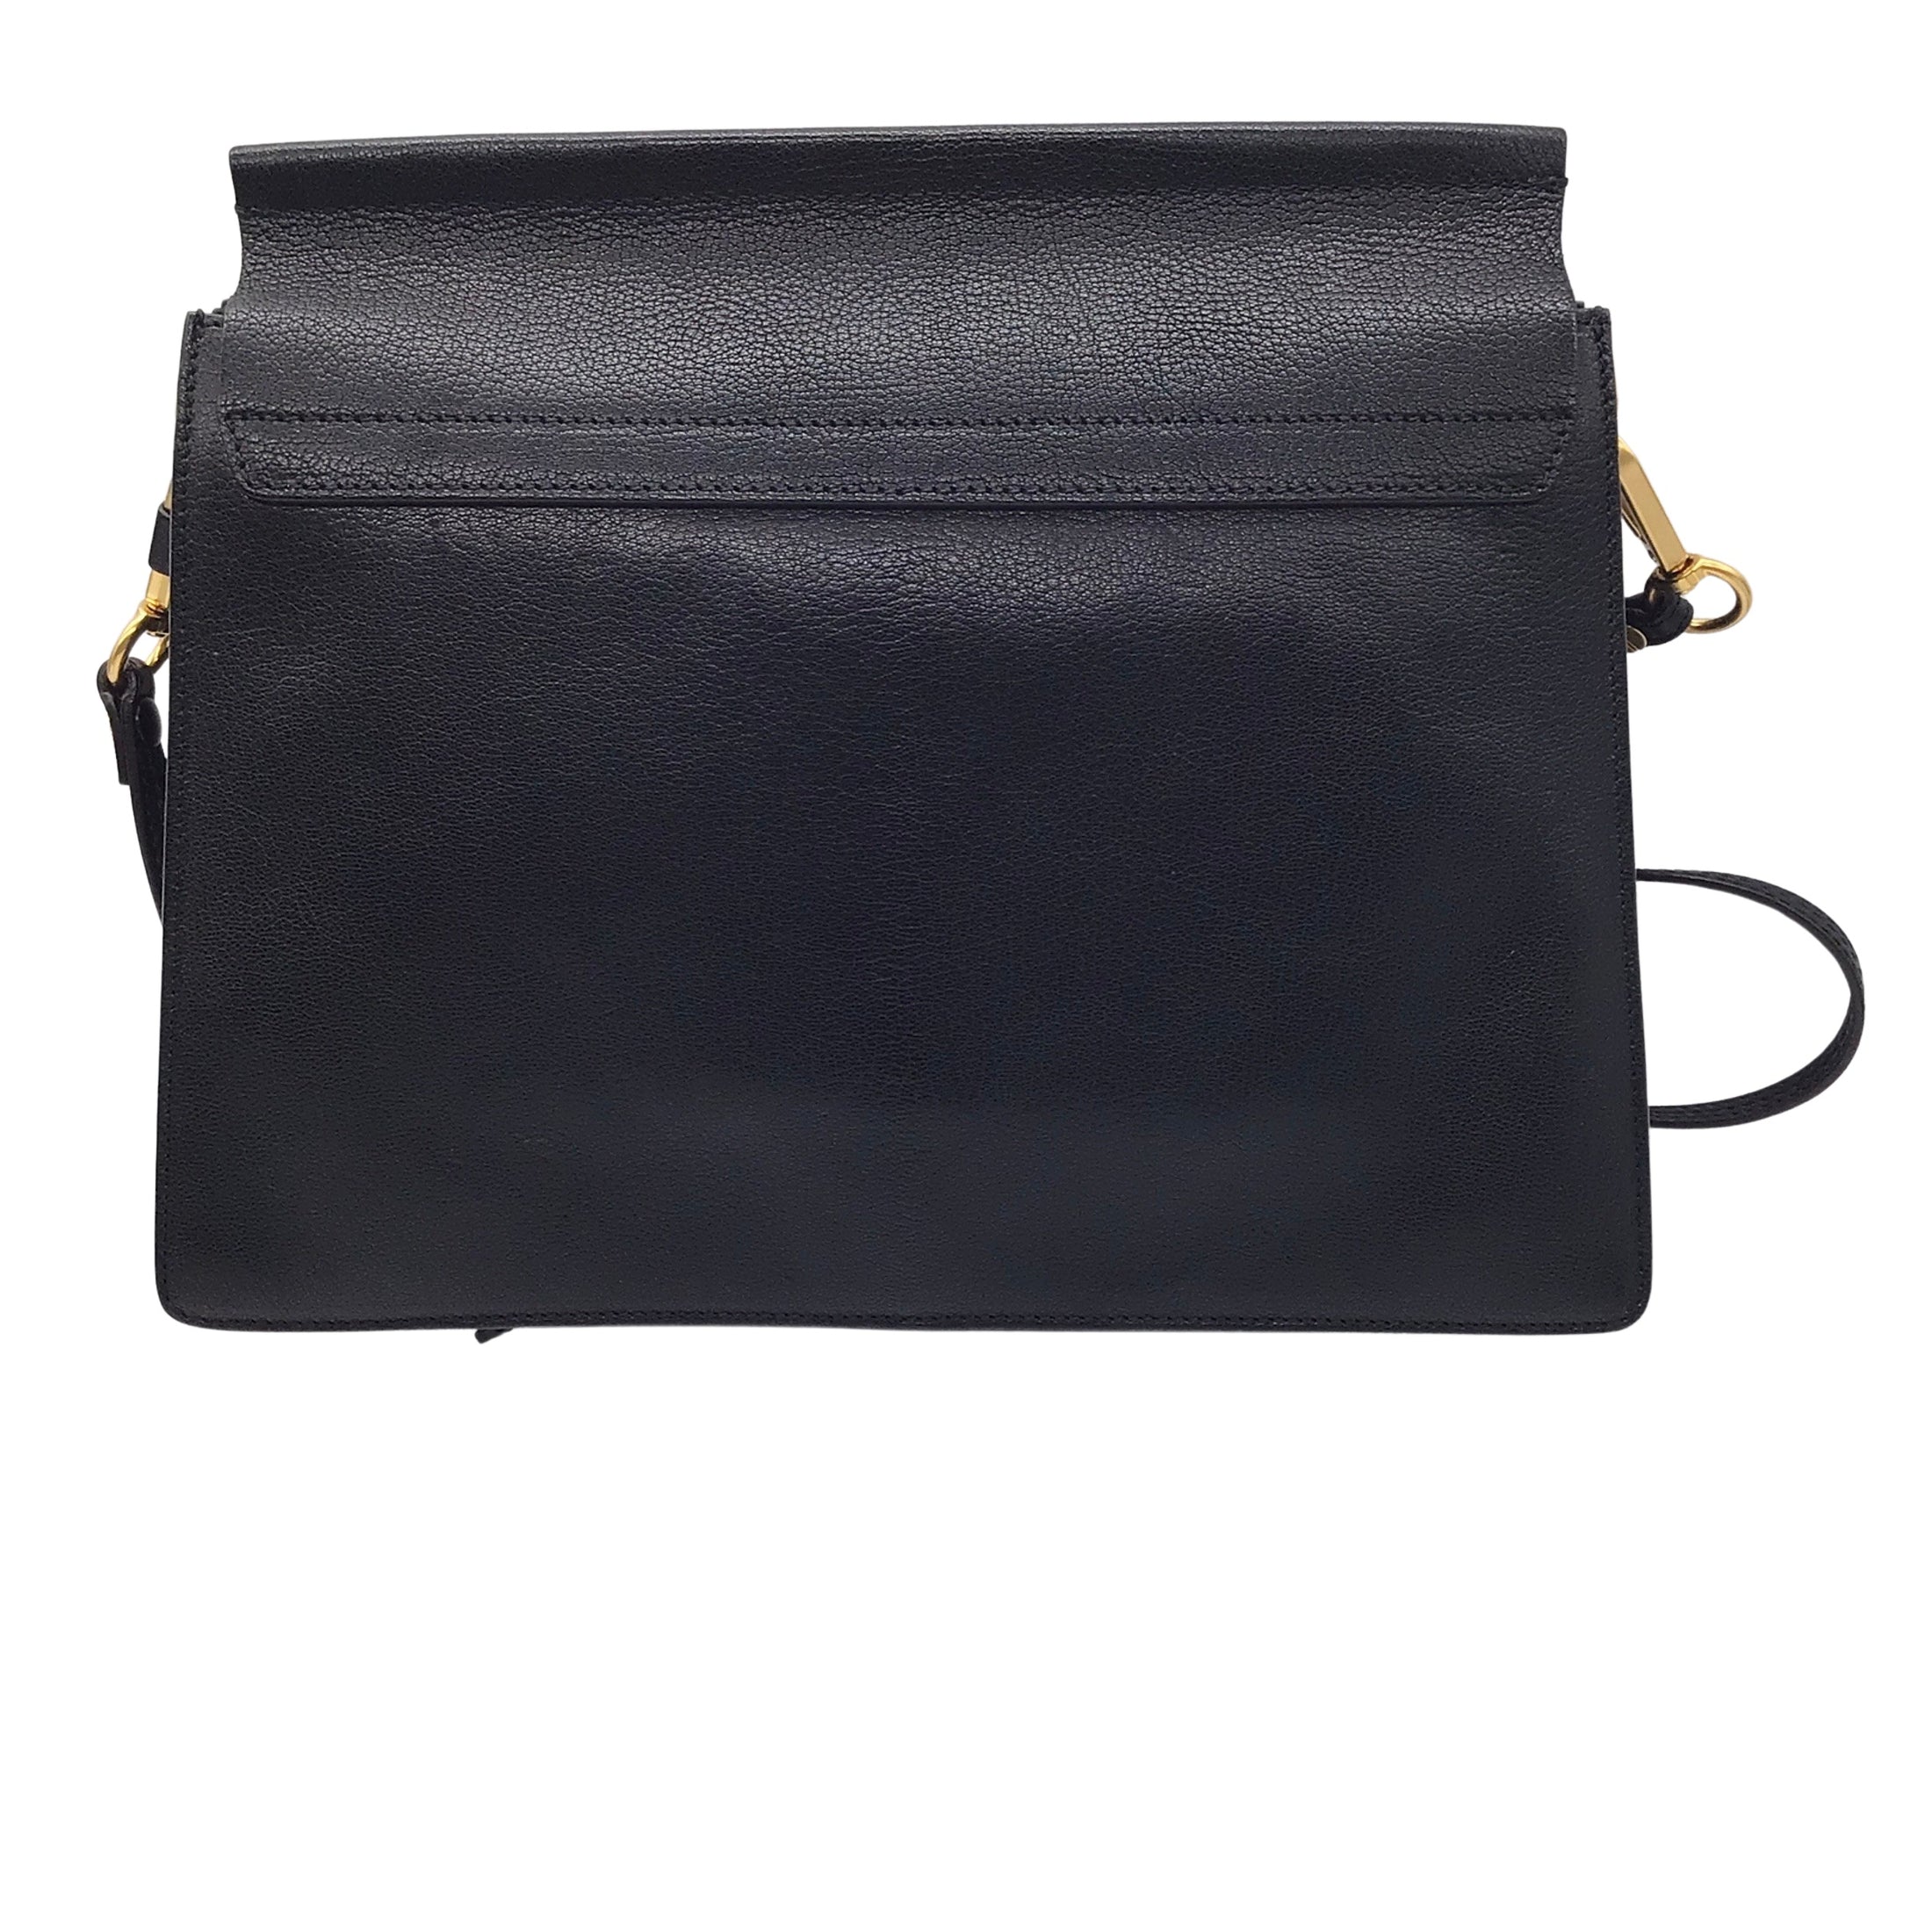 Chloe Black Faye Medium Leather Shoulder Bag